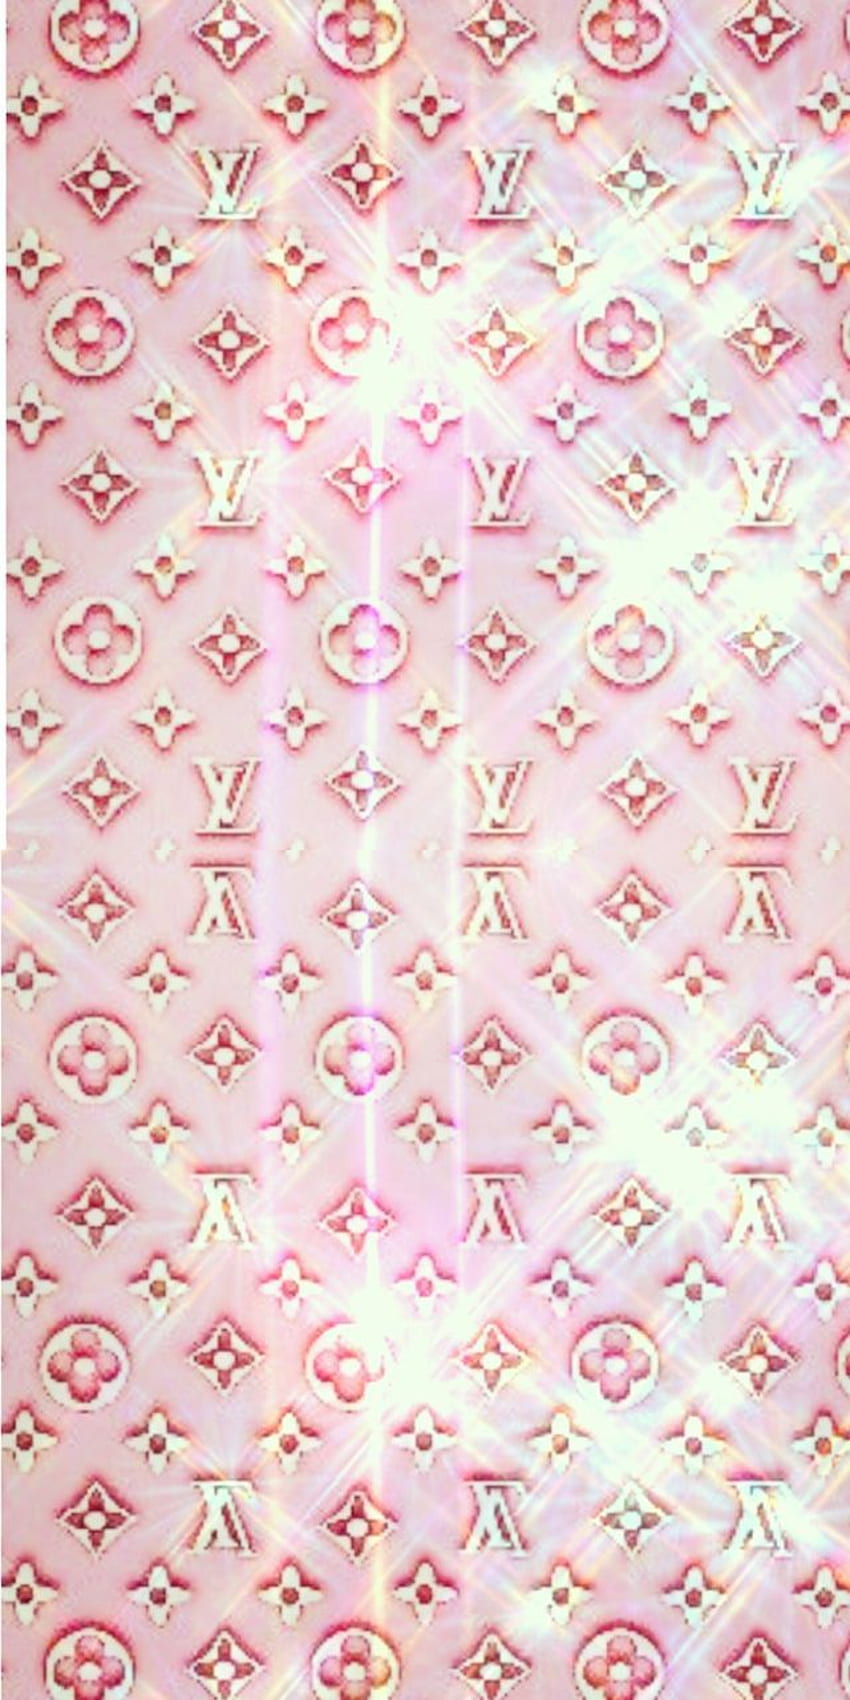 Louis Vuitton Wallpaper for Home  Louis vuitton iphone wallpaper